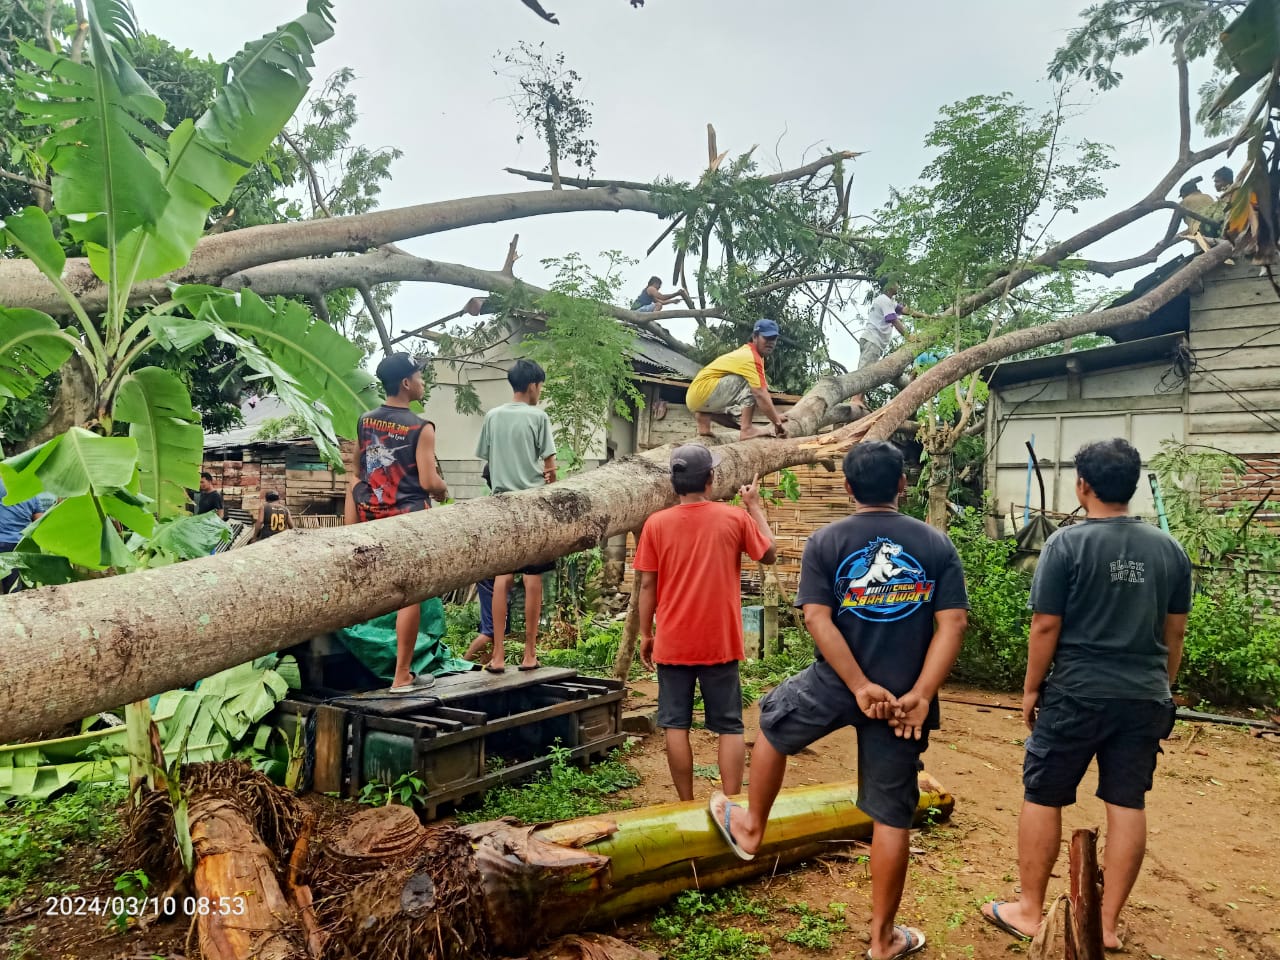 BPBD Trenggalek bersama warga, TNI dan Polri berupaya membersihkan dampak bencana. (foto: dokumentasi BPBD)